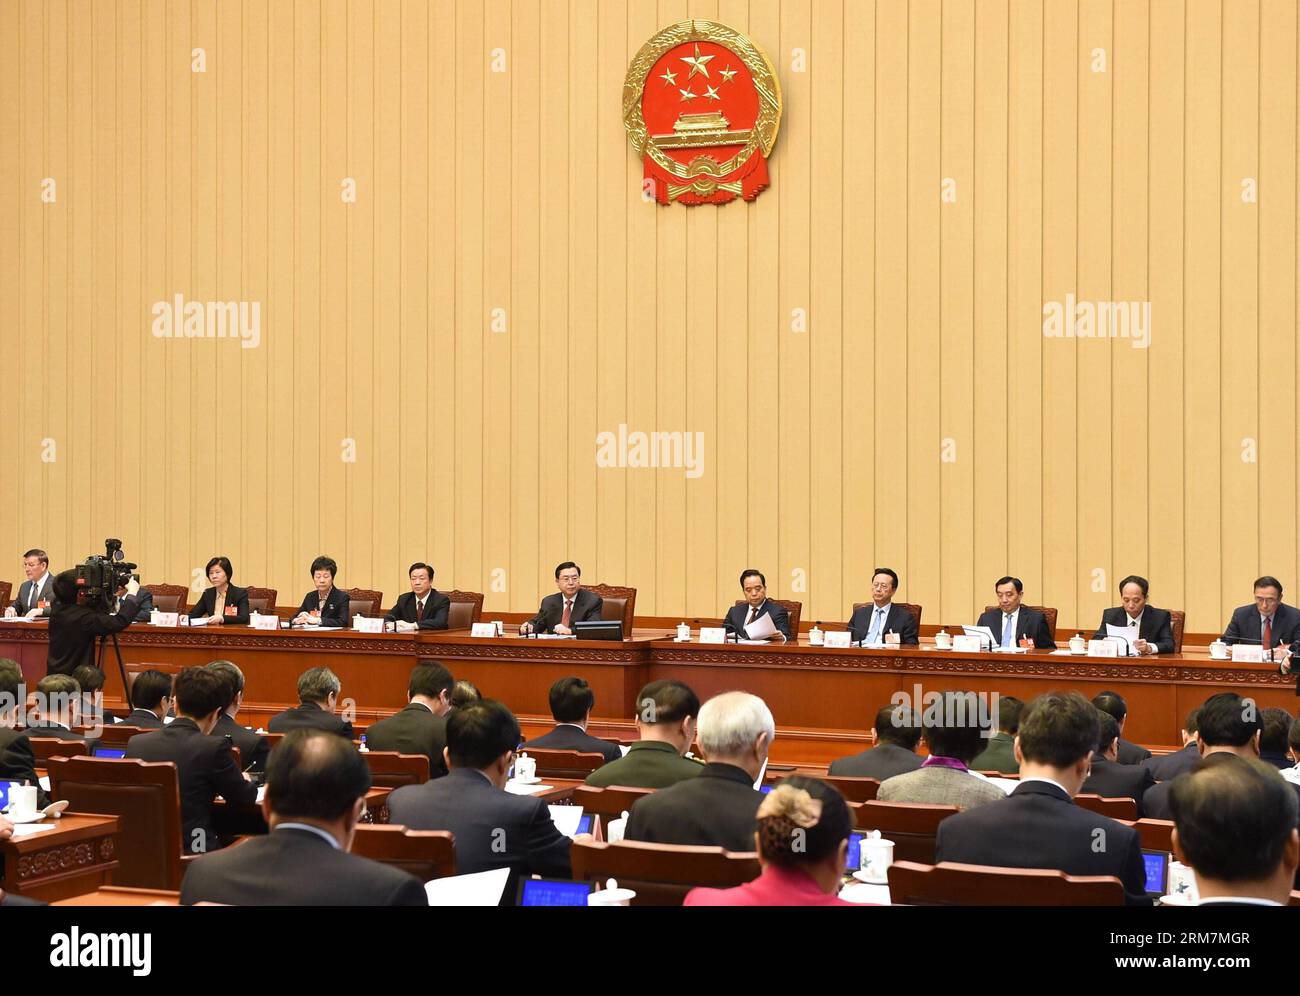 Zhang Dejiang (6. R), Exekutivvorsitzender des Präsidiums der zweiten Sitzung des 12. Nationalen Volkskongresses (NPC), leitet die zweite Sitzung des Präsidiums in der Großen Halle des Volkes in Peking, der Hauptstadt Chinas, am 9. März 2014. (Xinhua/Li Xueren) (zkr) (ZWEI SITZUNGEN) CHINA-BEIJING-NPC-PRESIDIUM-MEETING (CN) PUBLICATIONxNOTxINxCHN Zhang Dejiang 6. R Exekutivvorsitzender Person des Präsidiums der zweiten Sitzung der 12. Nationalen Prominenz S-Kongress NPC-Vorsitzender der zweiten Sitzung des PRÄSIDIUMS in der Großen Halle der Prominenten in Peking Stockfoto